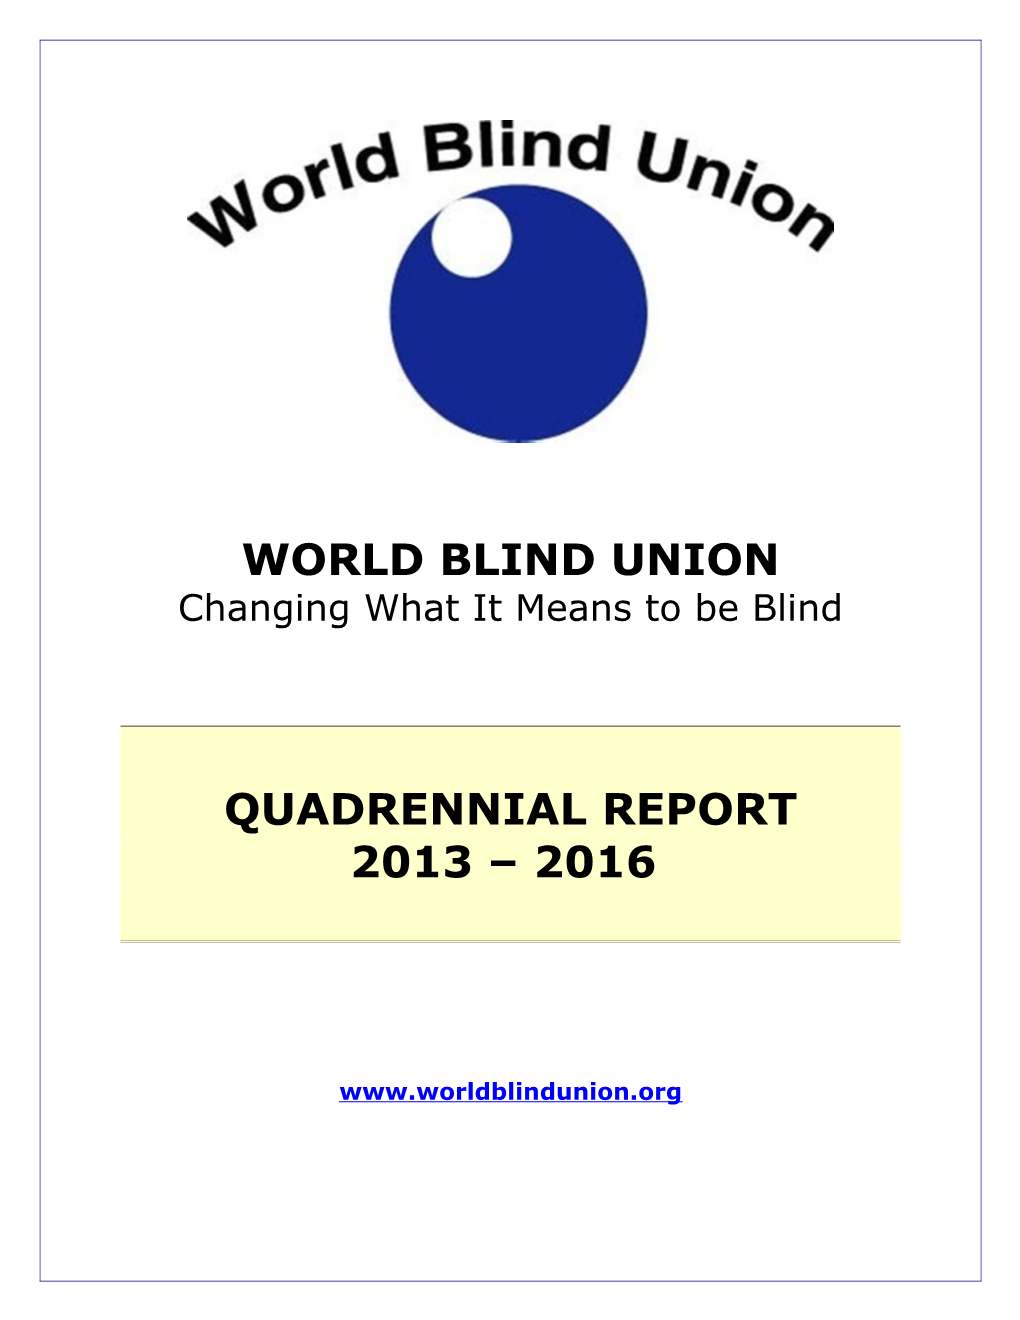 WBU 2013 - 2016 Quadrennial Report